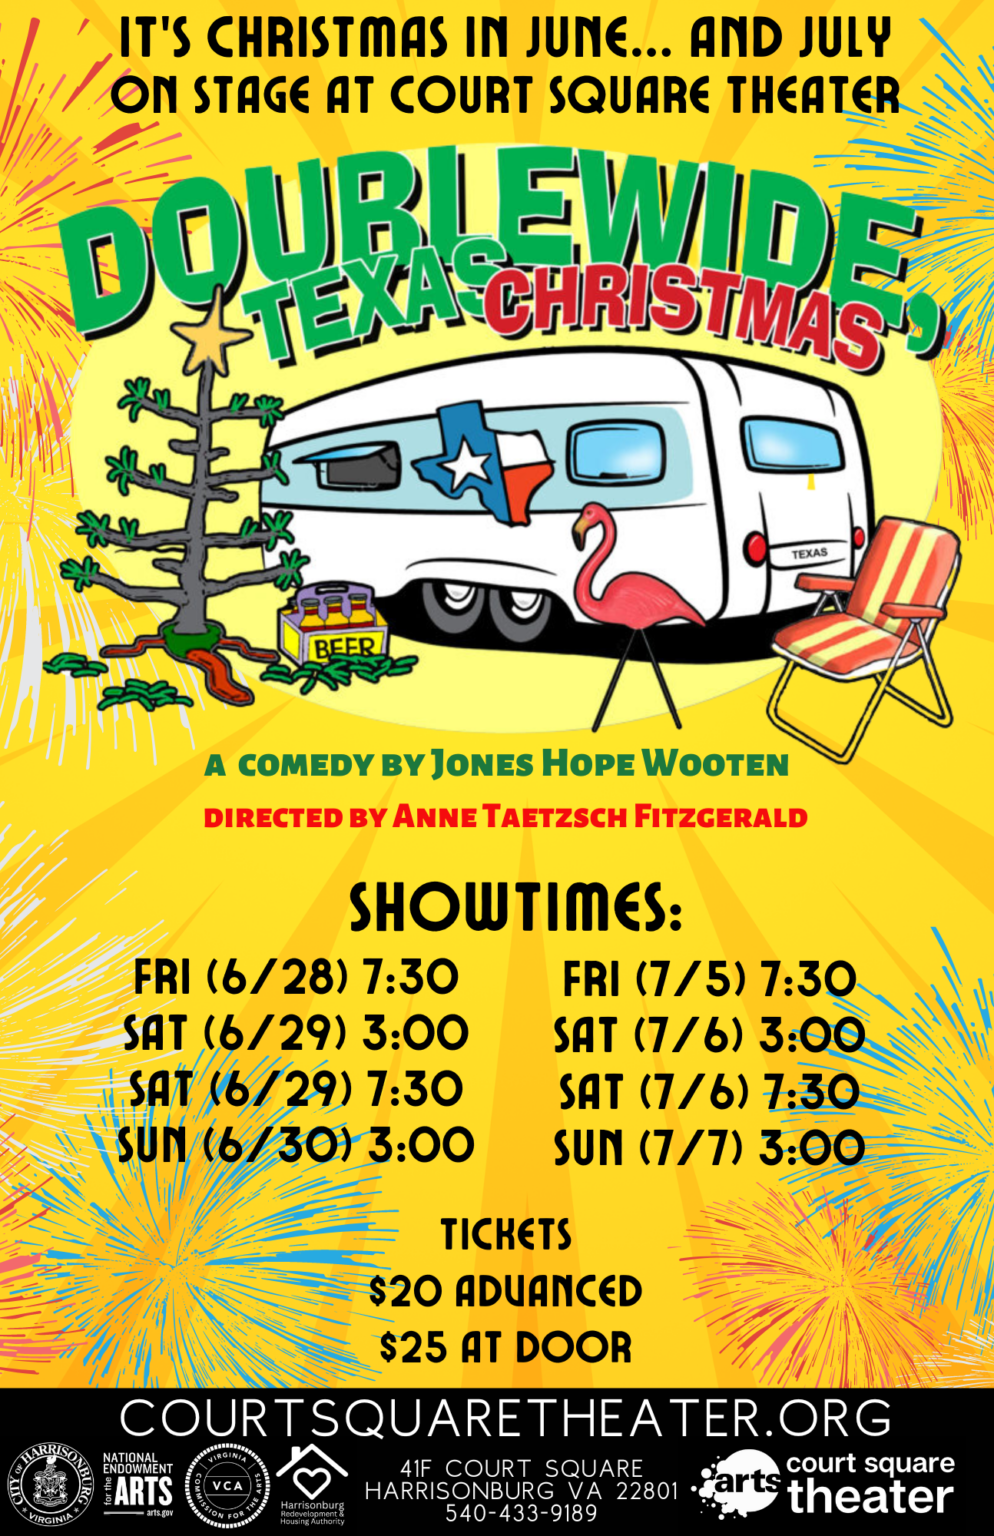 A Doublewide Texas Christmas